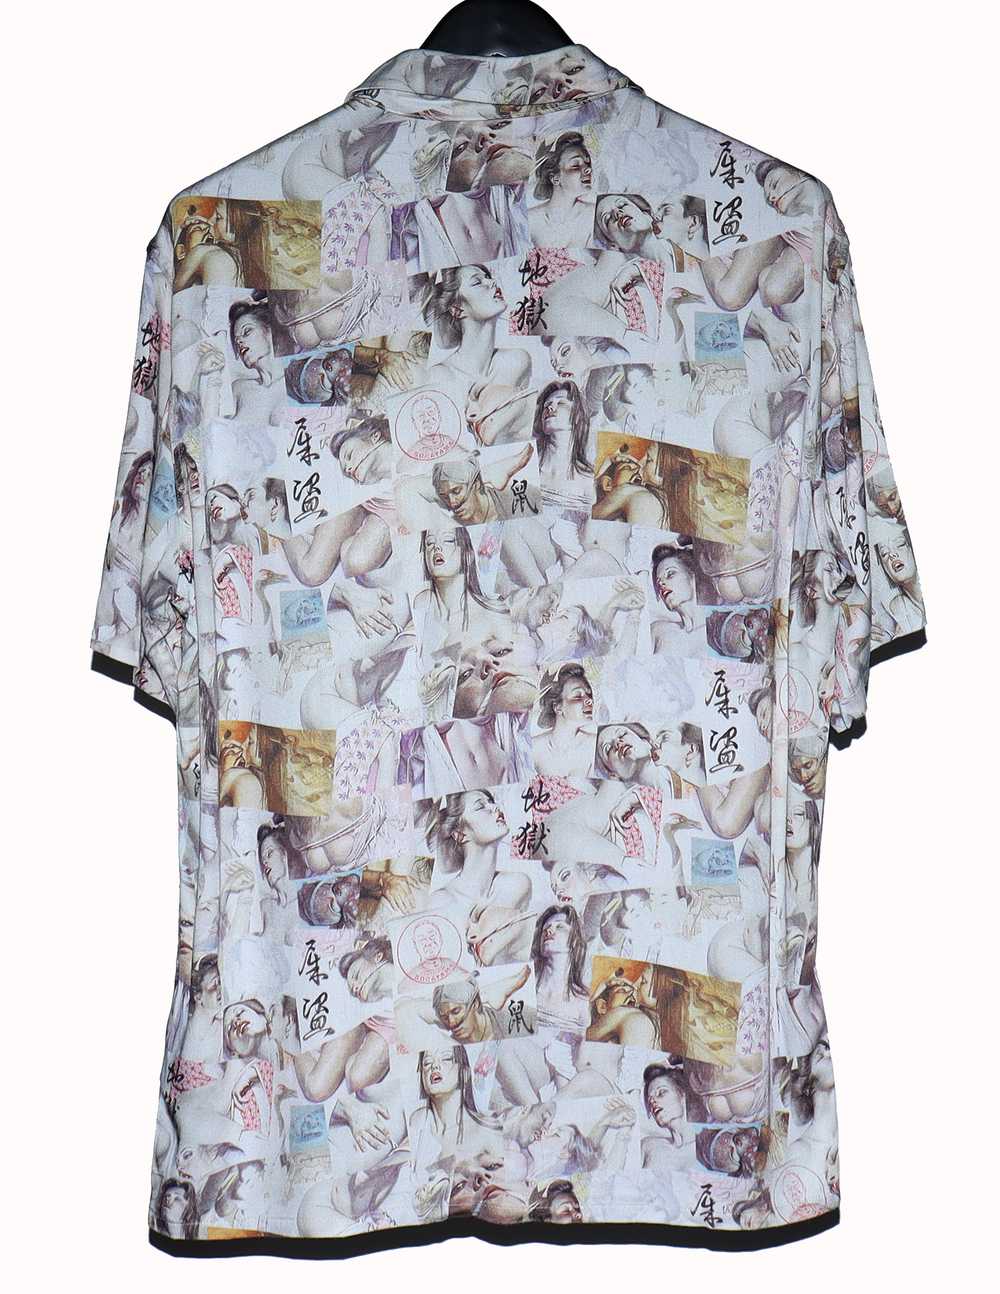 X-Large Sorayama 'Erotica' Rayon Shirt - image 2